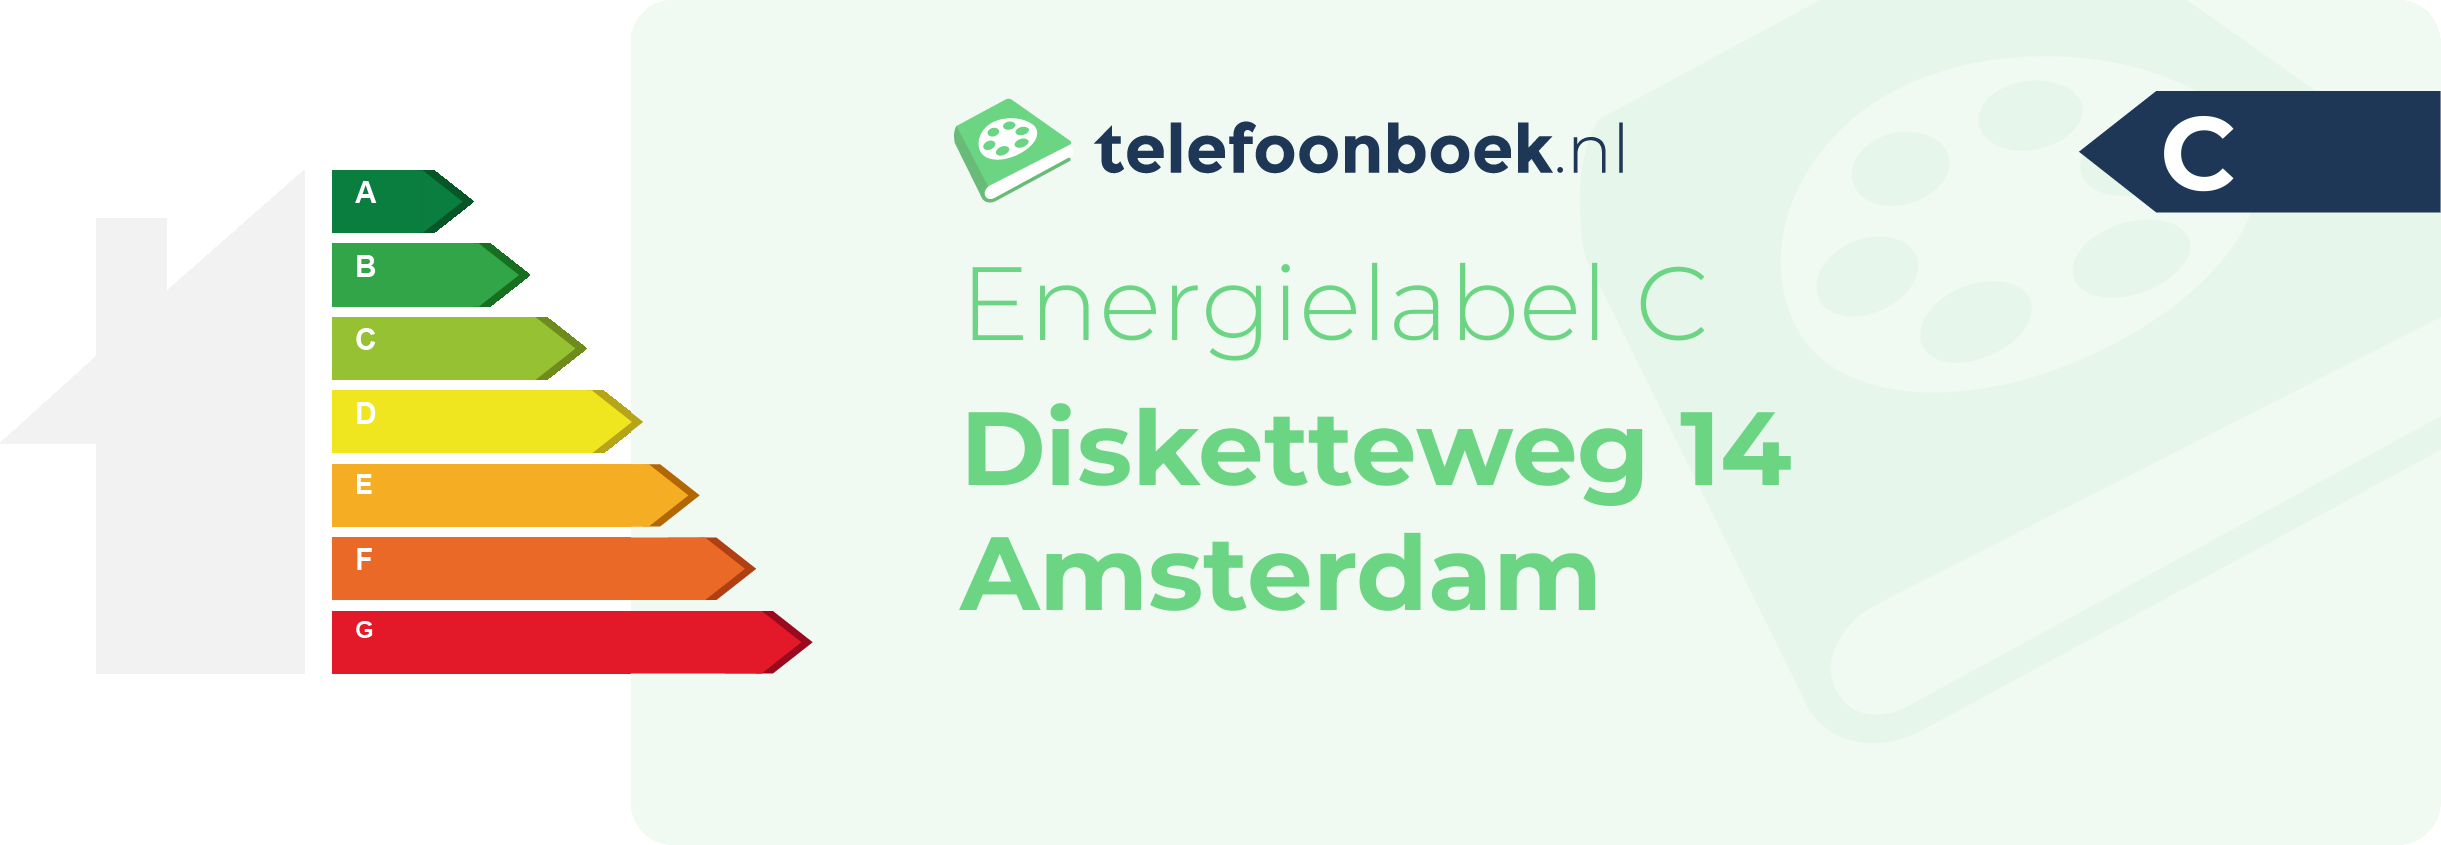 Energielabel Disketteweg 14 Amsterdam